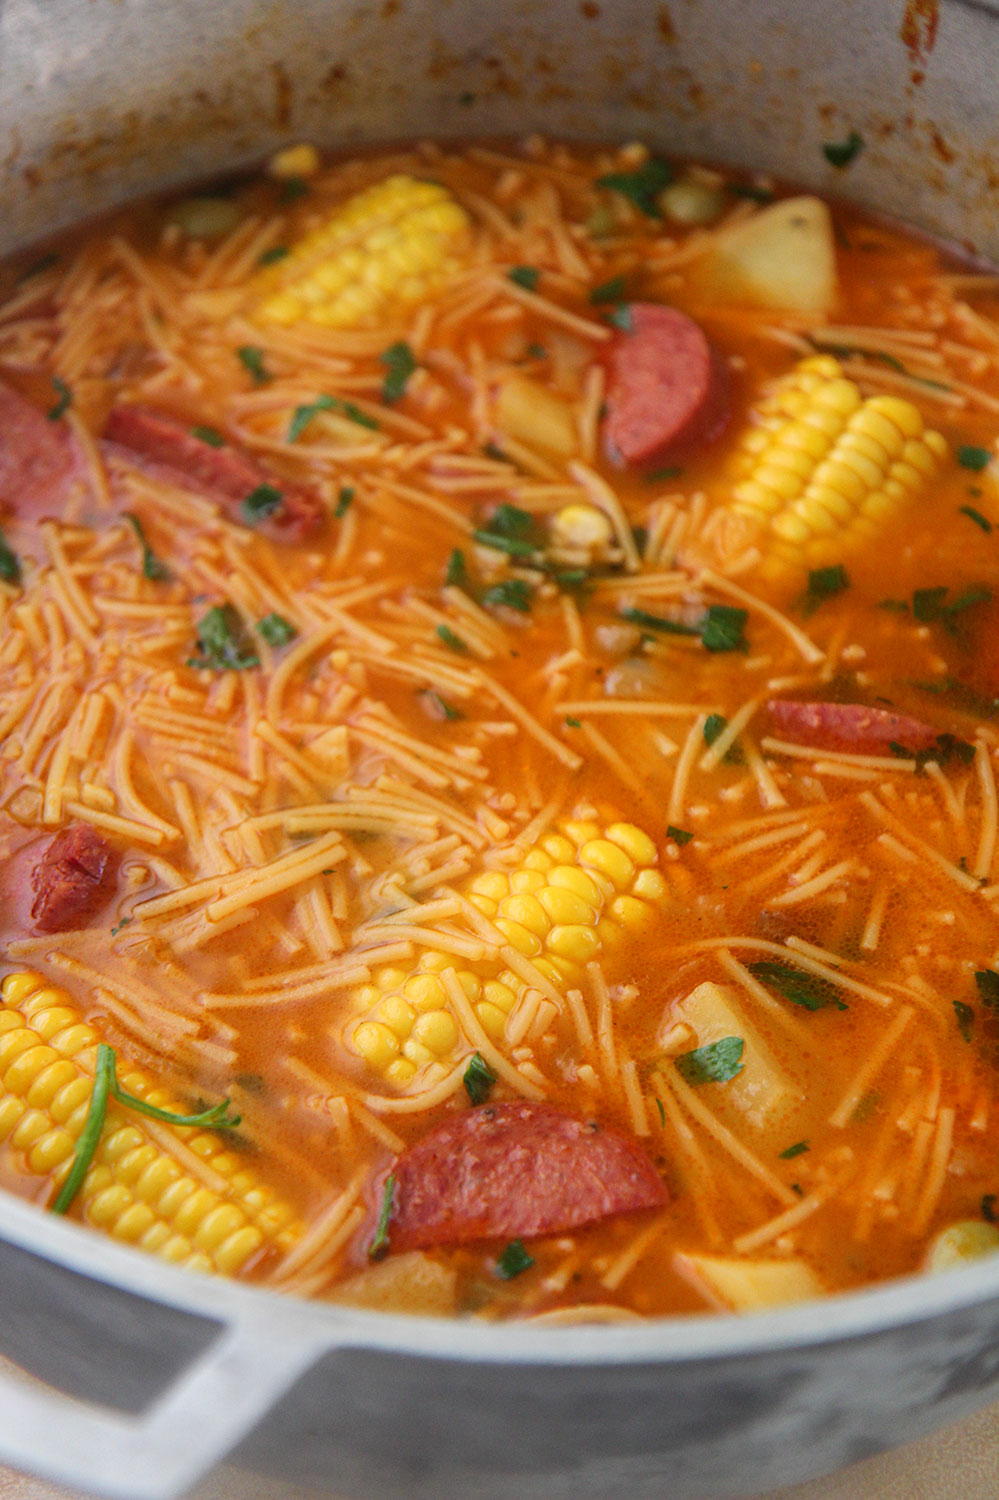 Sopa de Salchichon(Puerto Rican Salami Soup) - Cooked by Julie